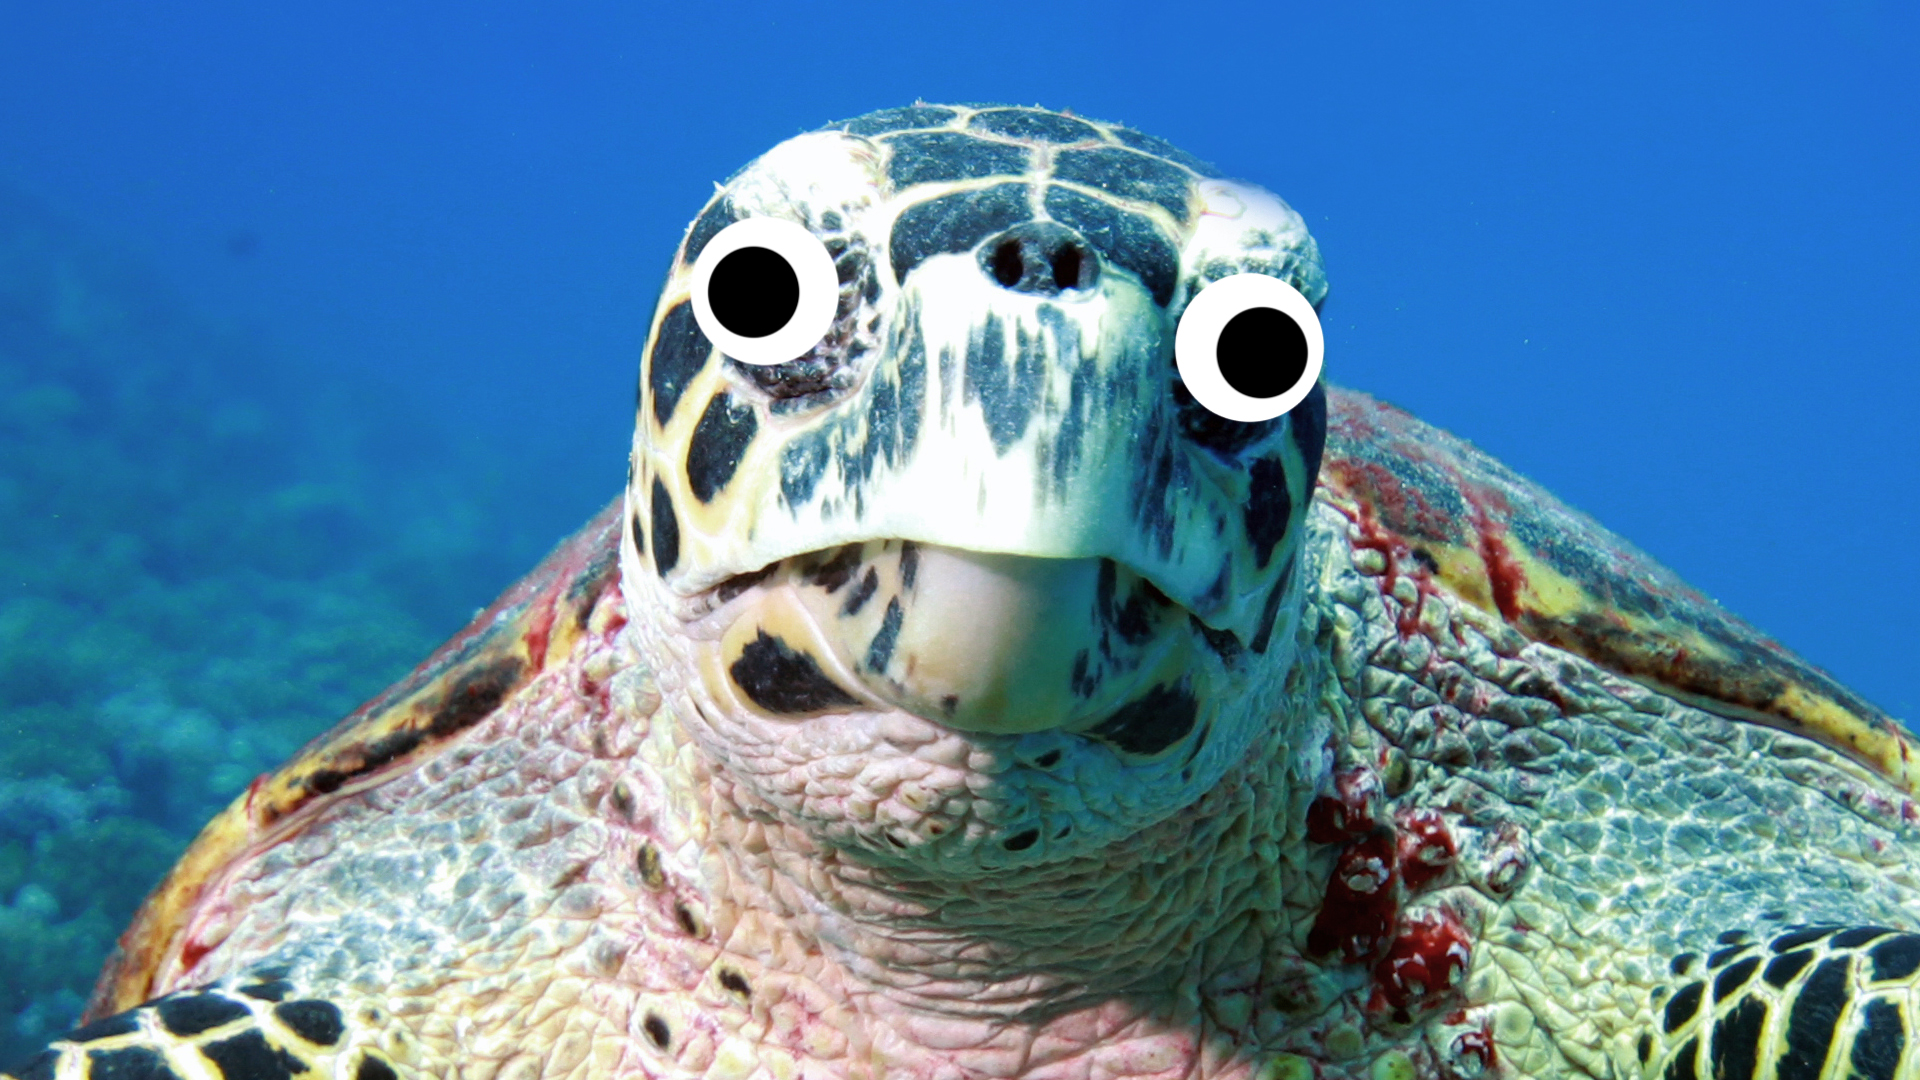 A close-up of a sea turtle